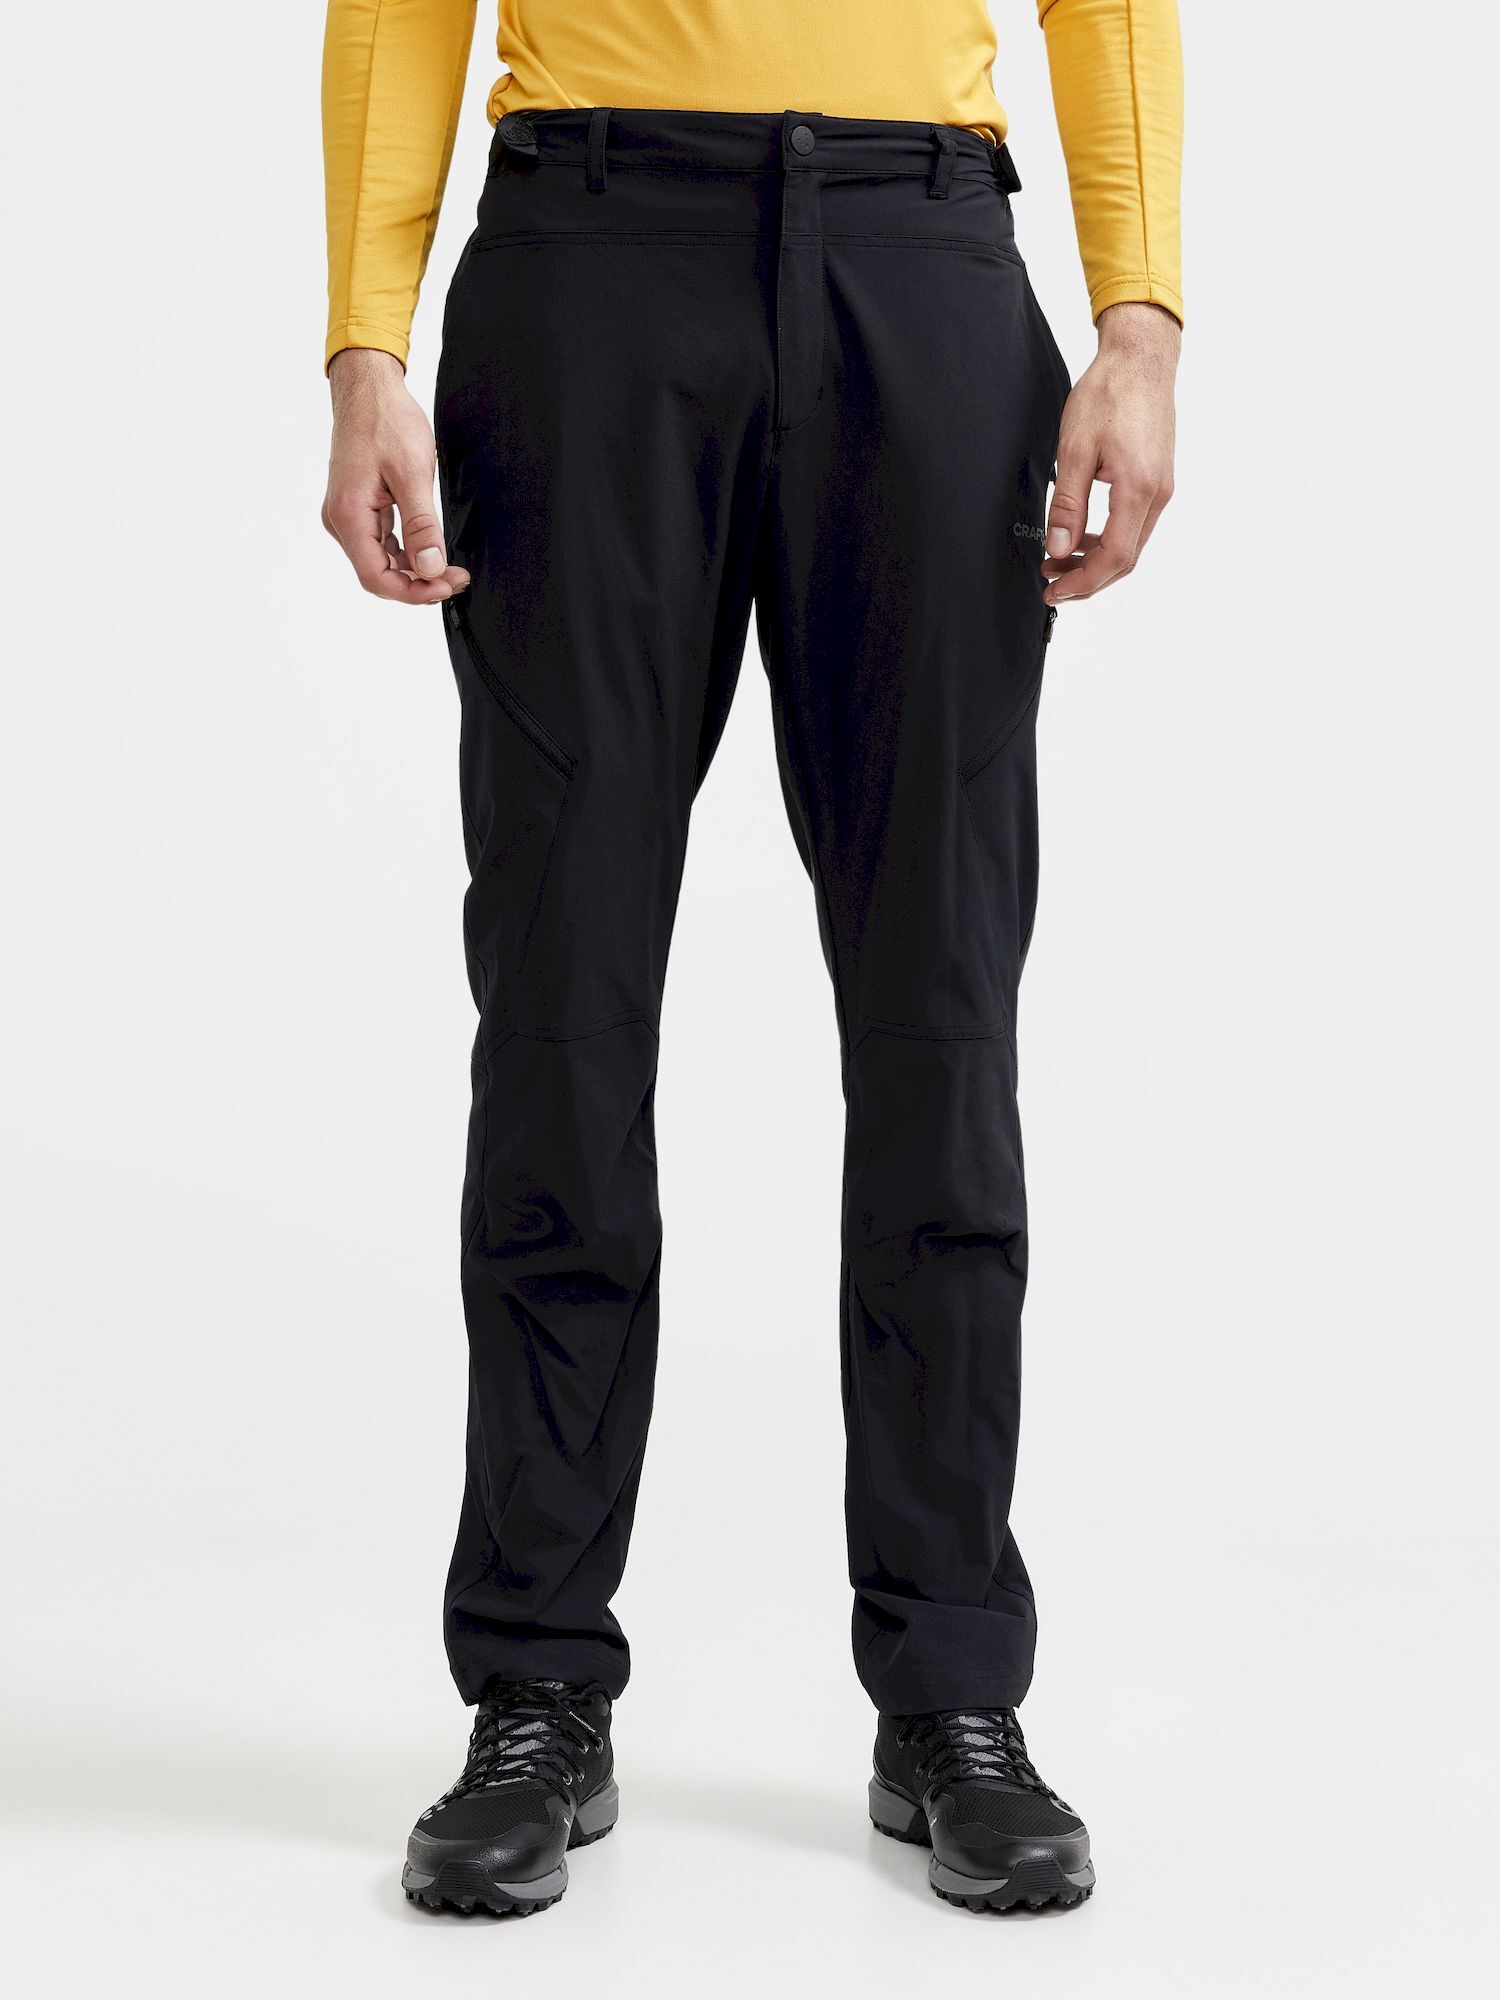 Craft Adv Explore Tech Pants - Walking trousers - Men's | Hardloop